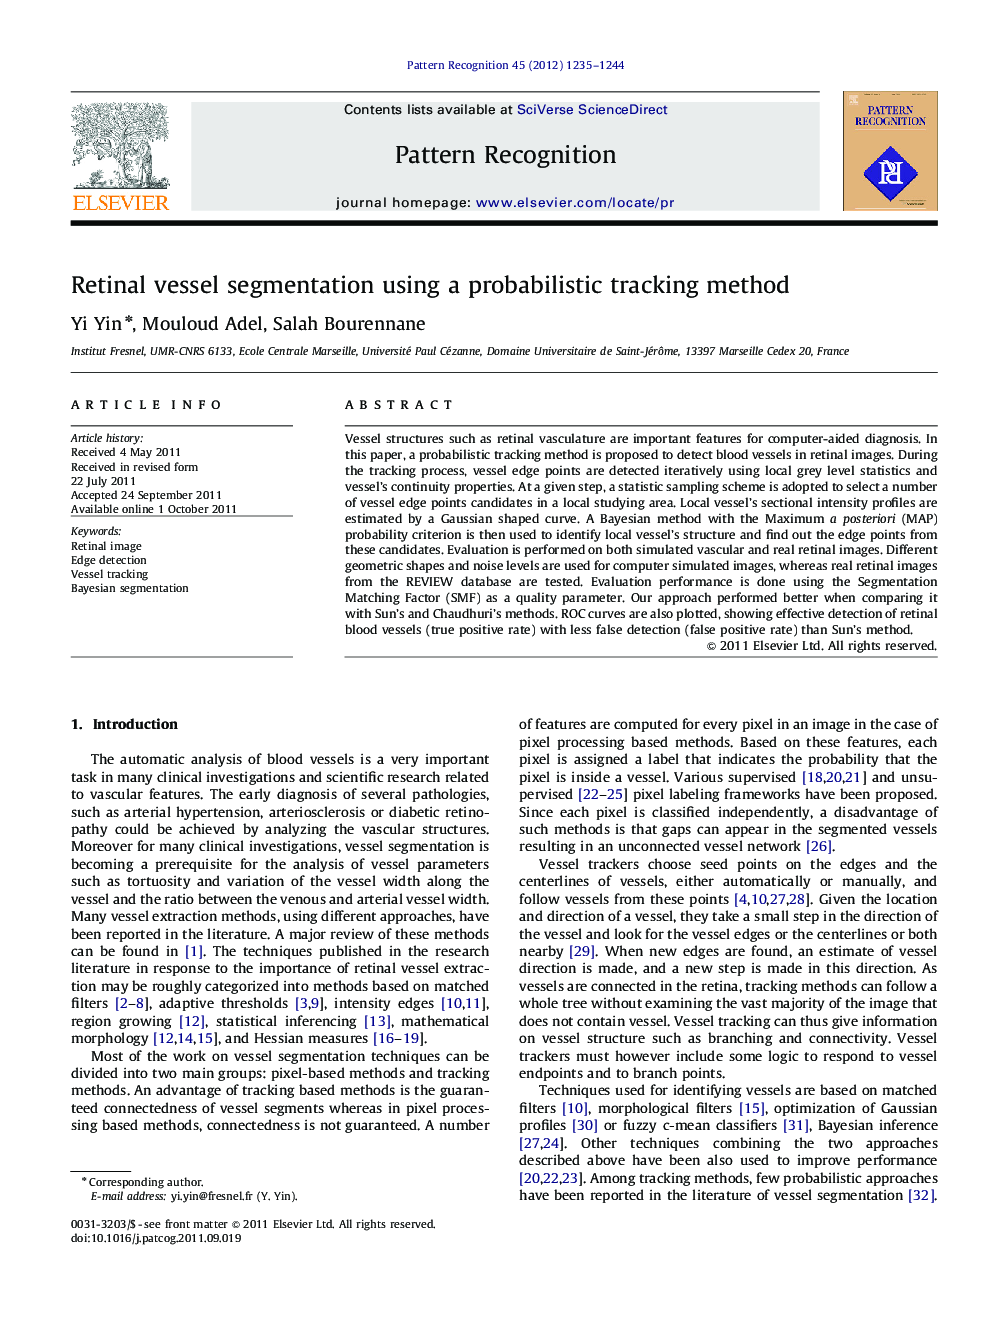 Retinal vessel segmentation using a probabilistic tracking method